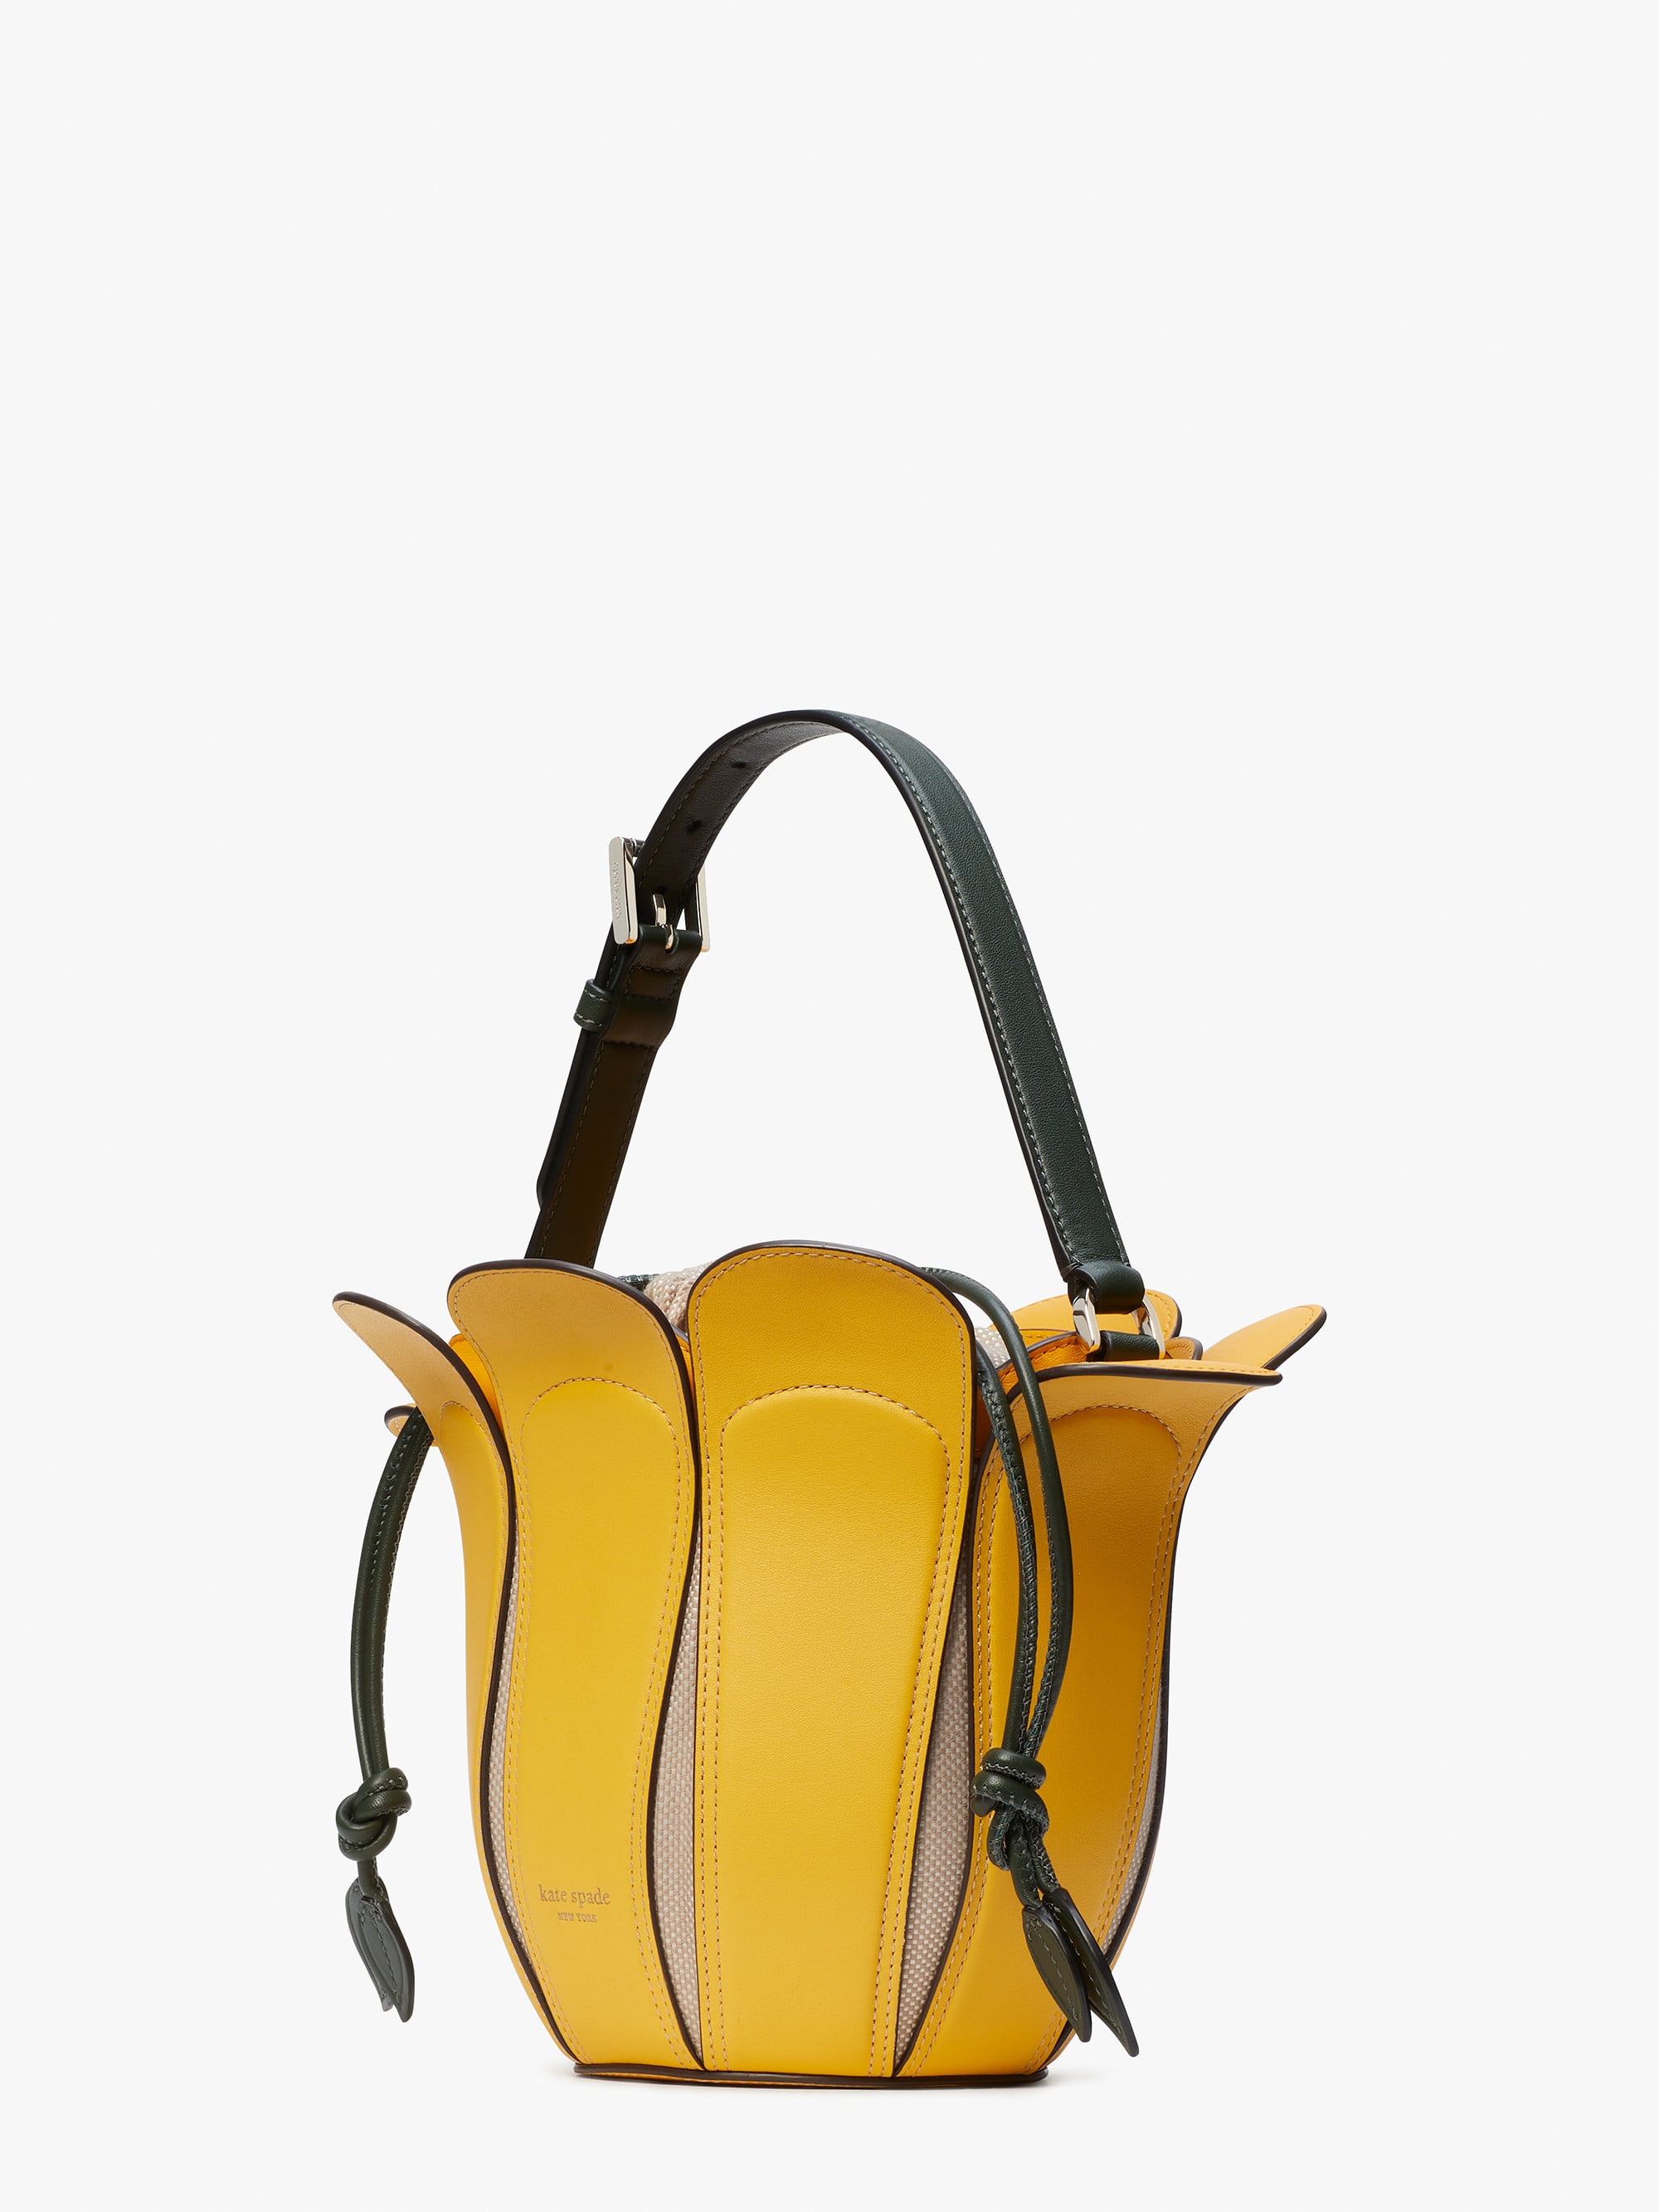 PamperPicks: 5 New Handbags from Kate Spade That We're Loving This Summer